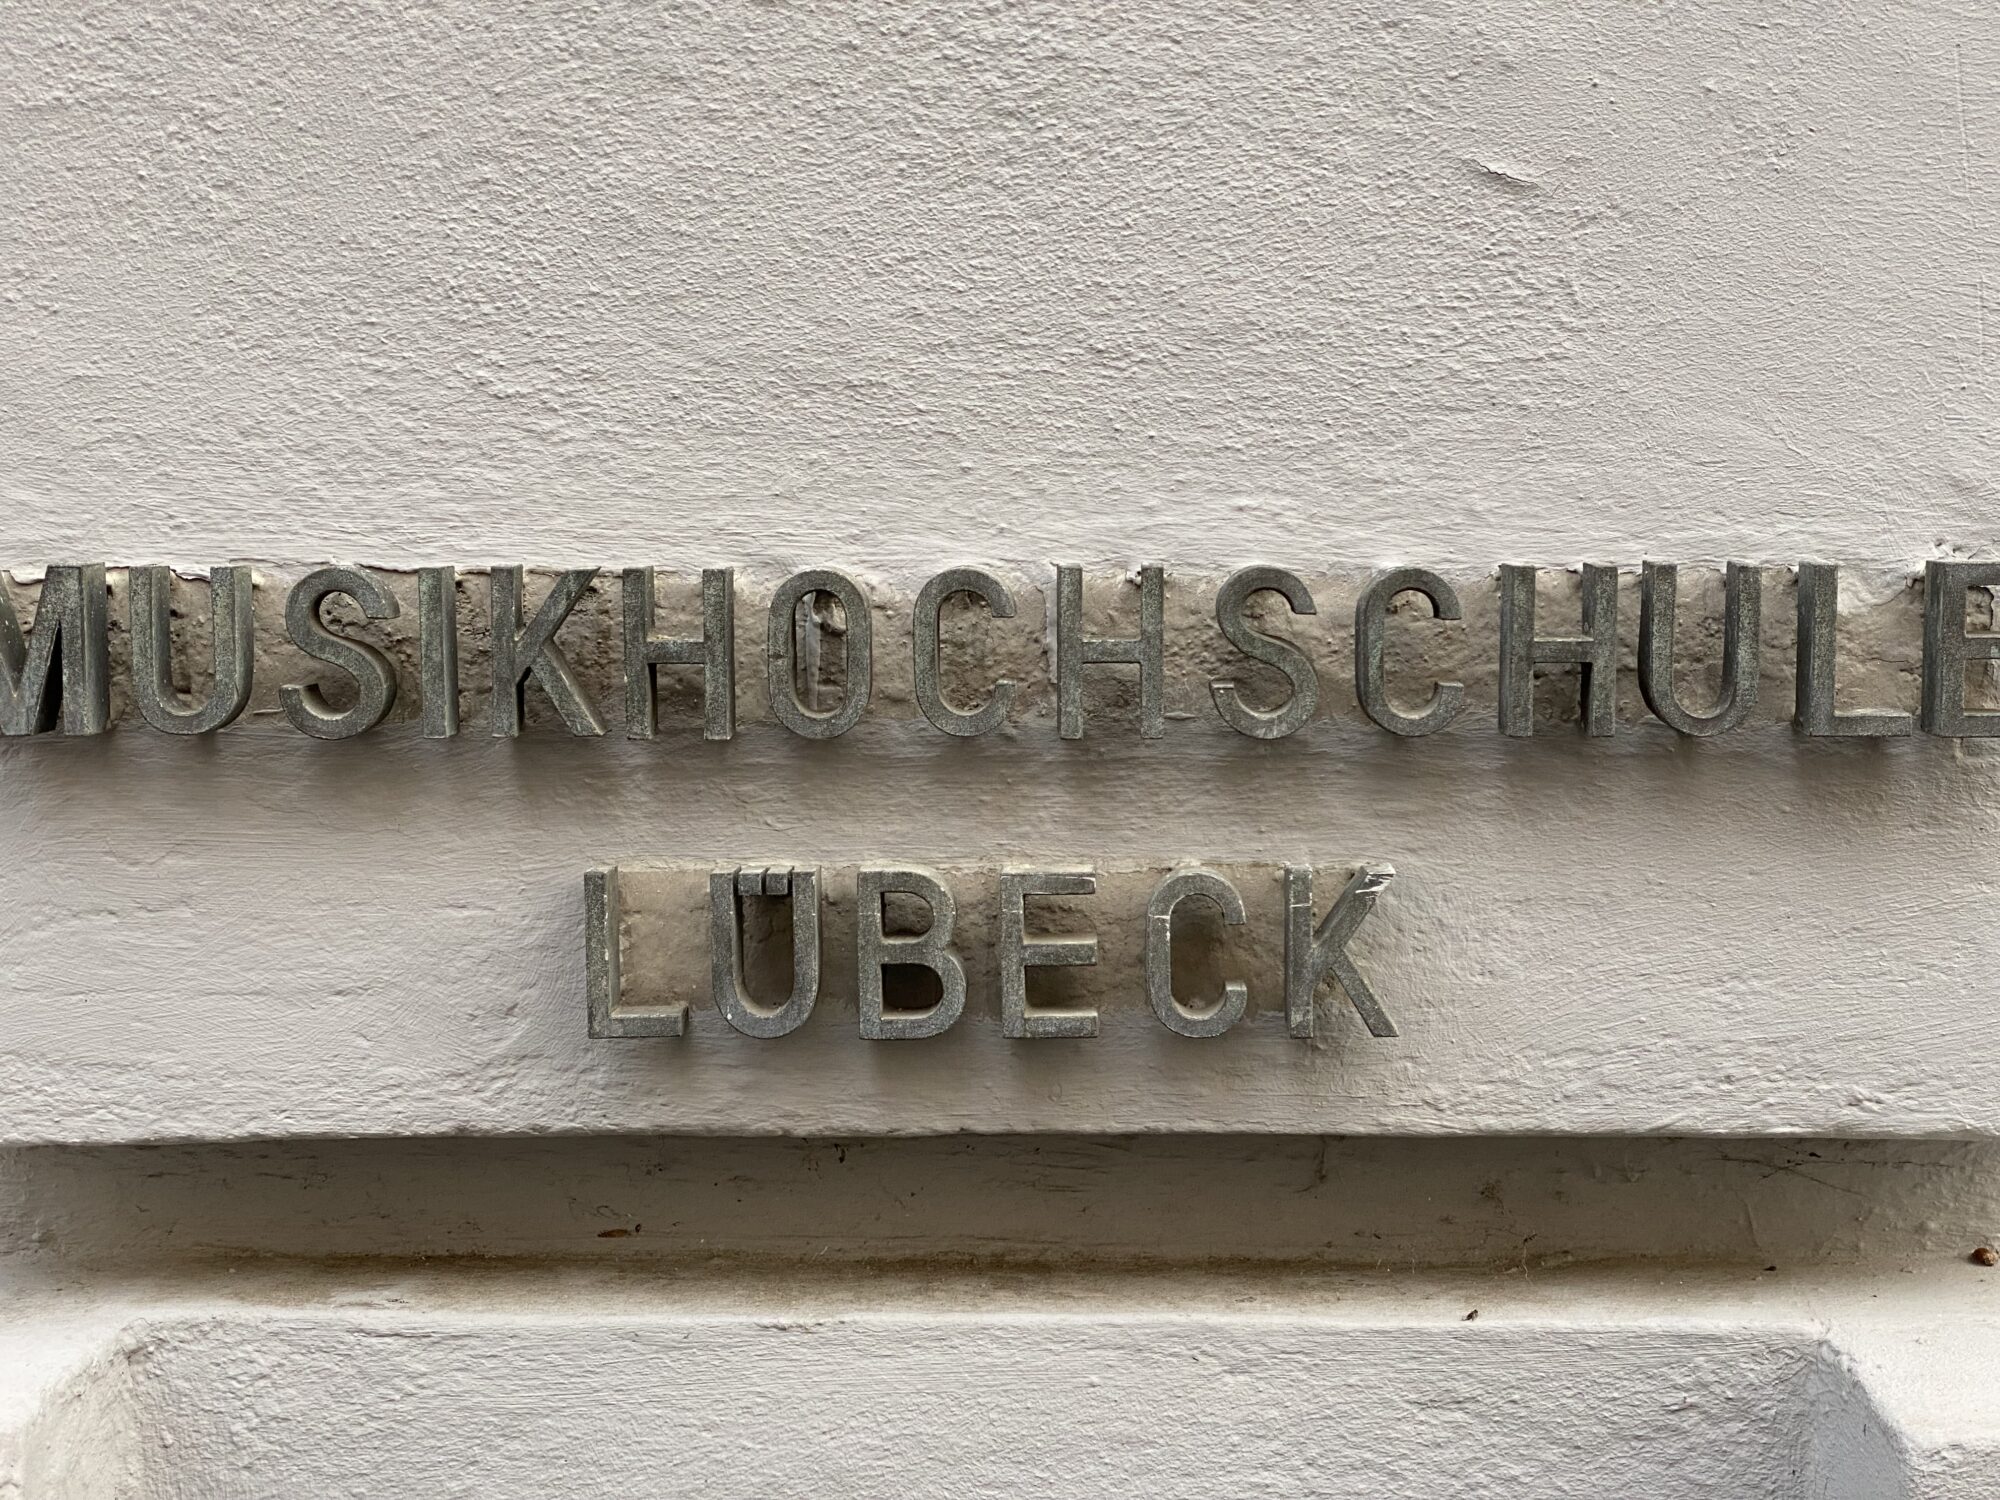 The Petersgrube in Lübeck